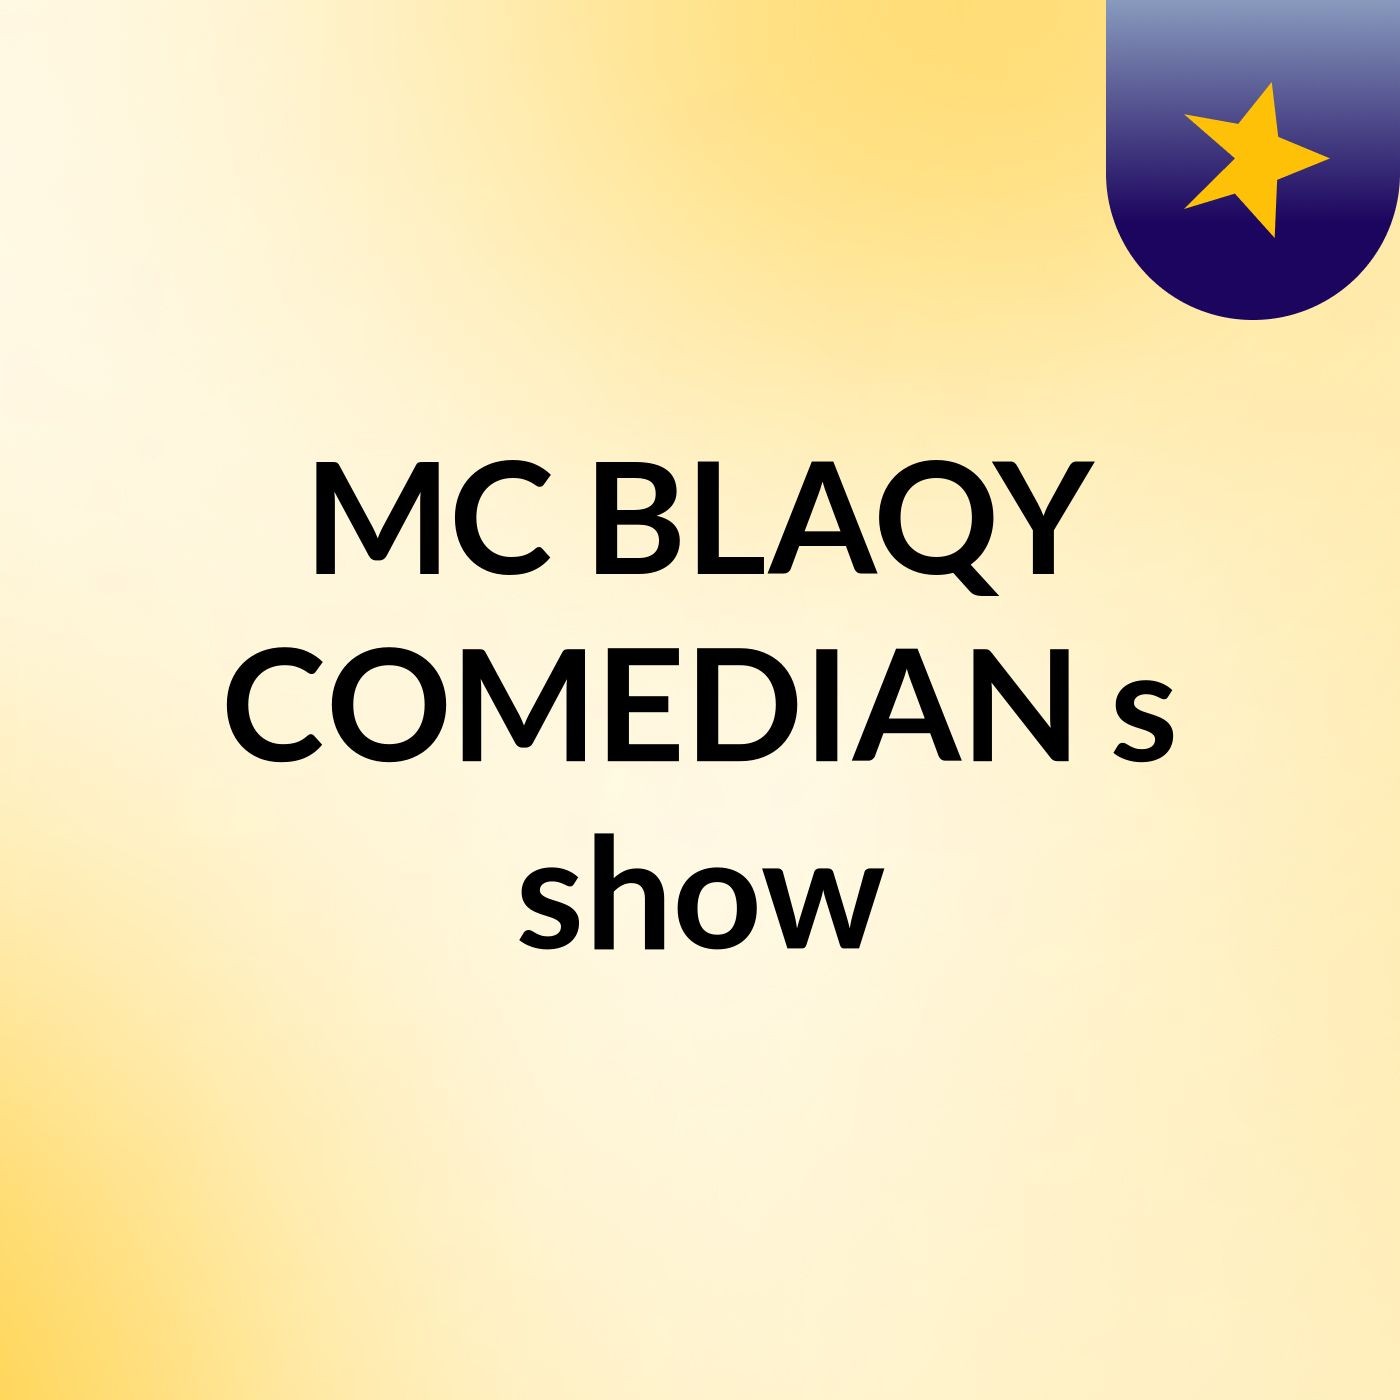 MC BLAQY COMEDIAN's show